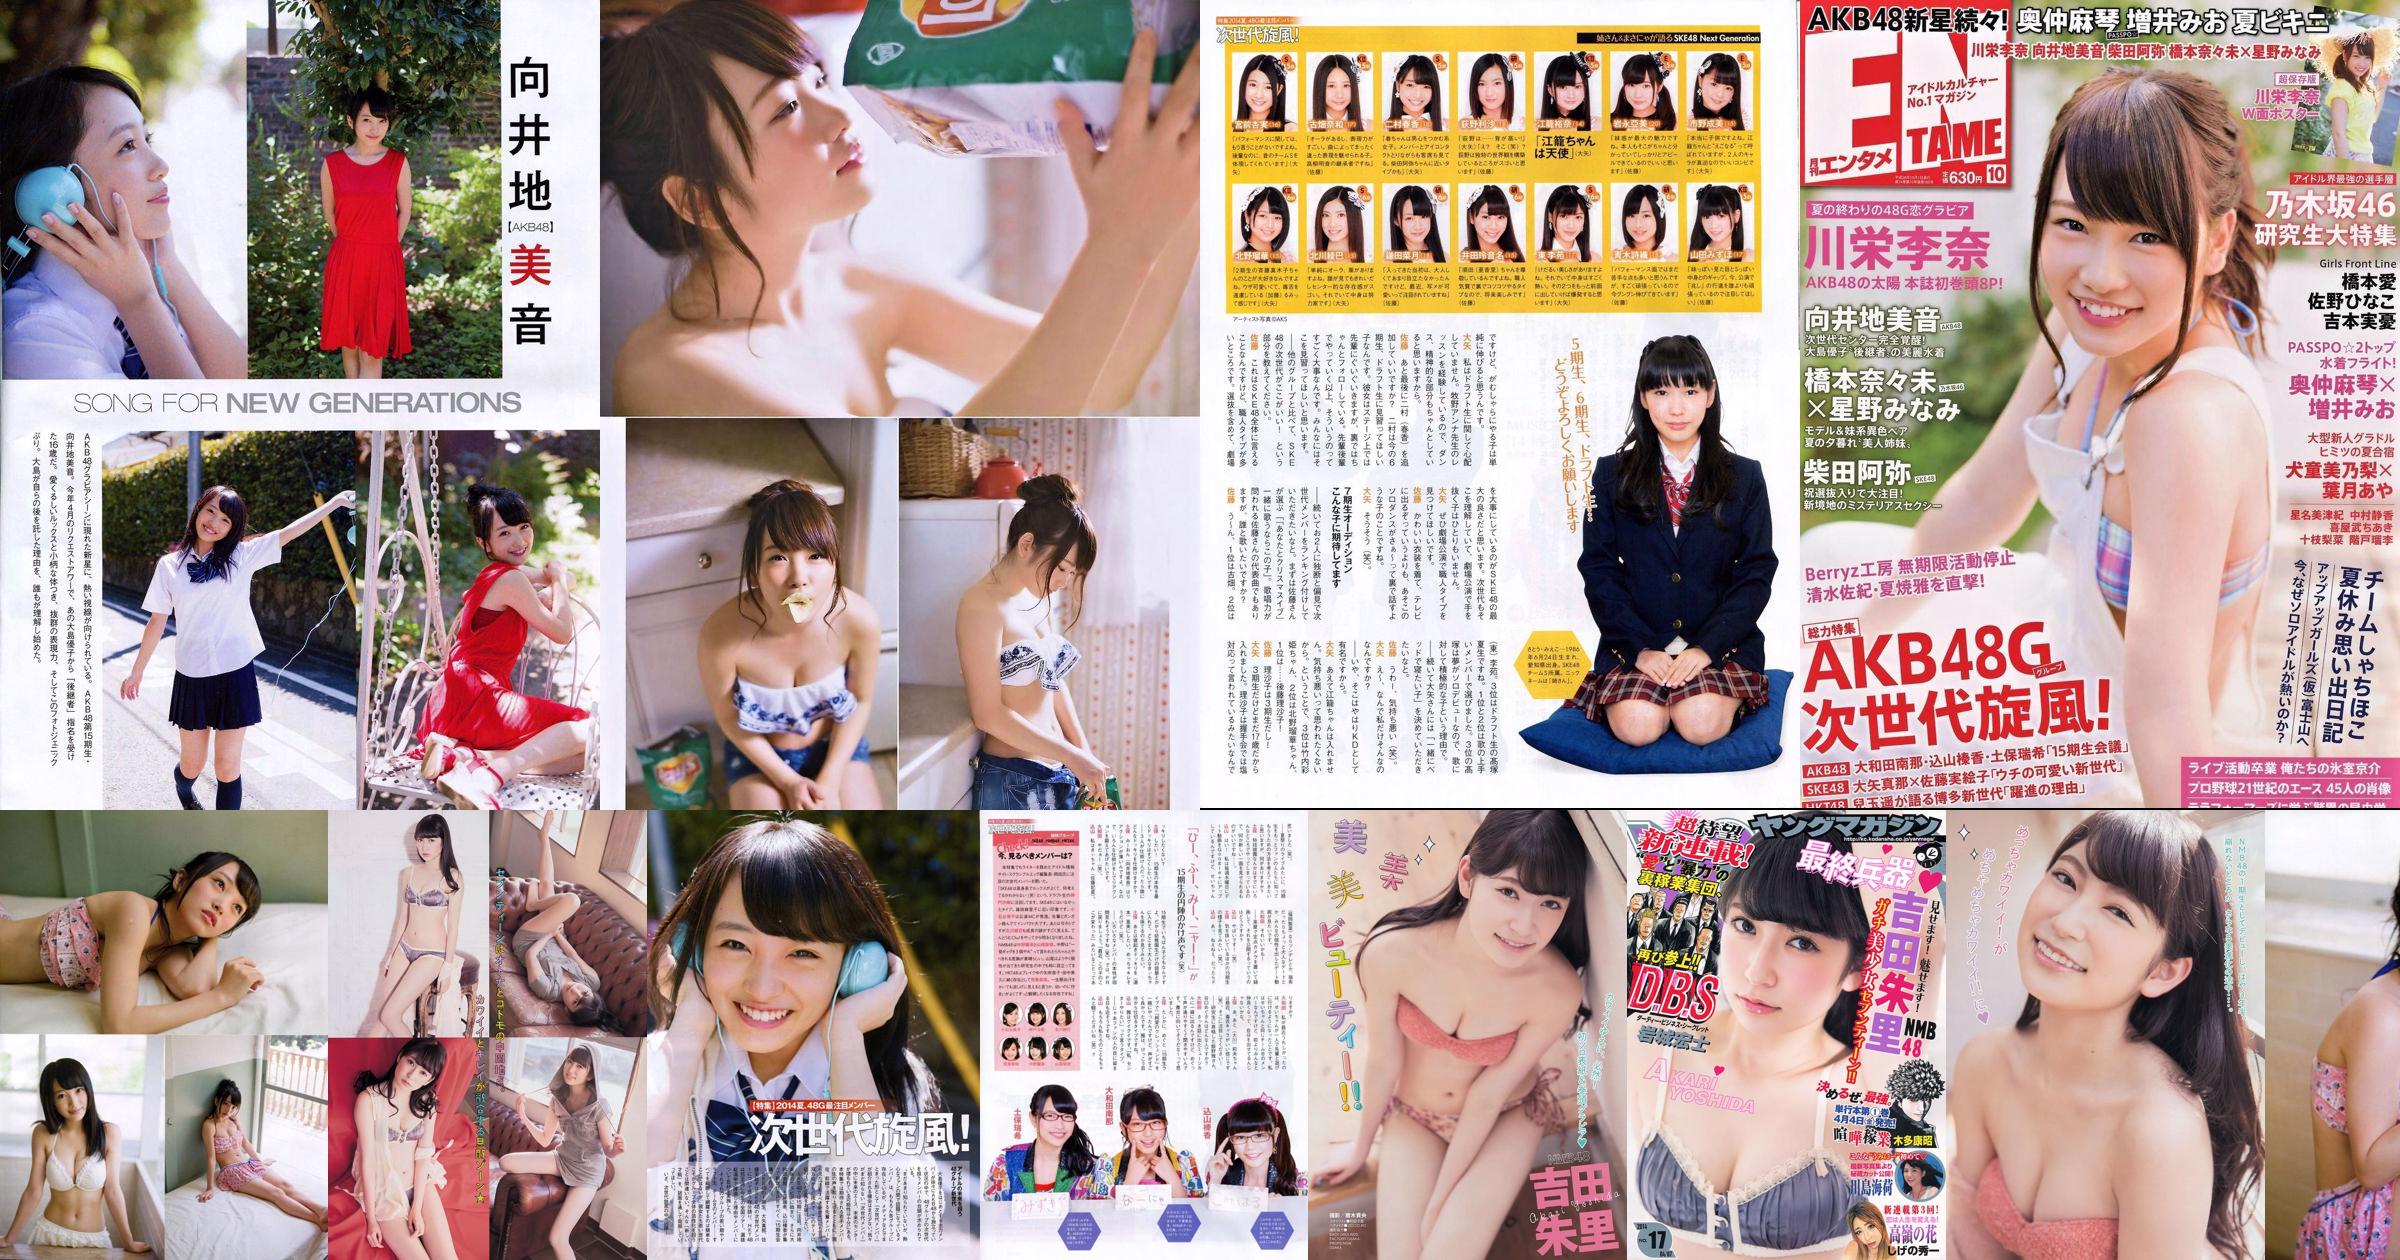 [Młody magazyn] Akari Yoshida Umika Kawashima 2014 nr 17 Zdjęcie No.b90395 Strona 1